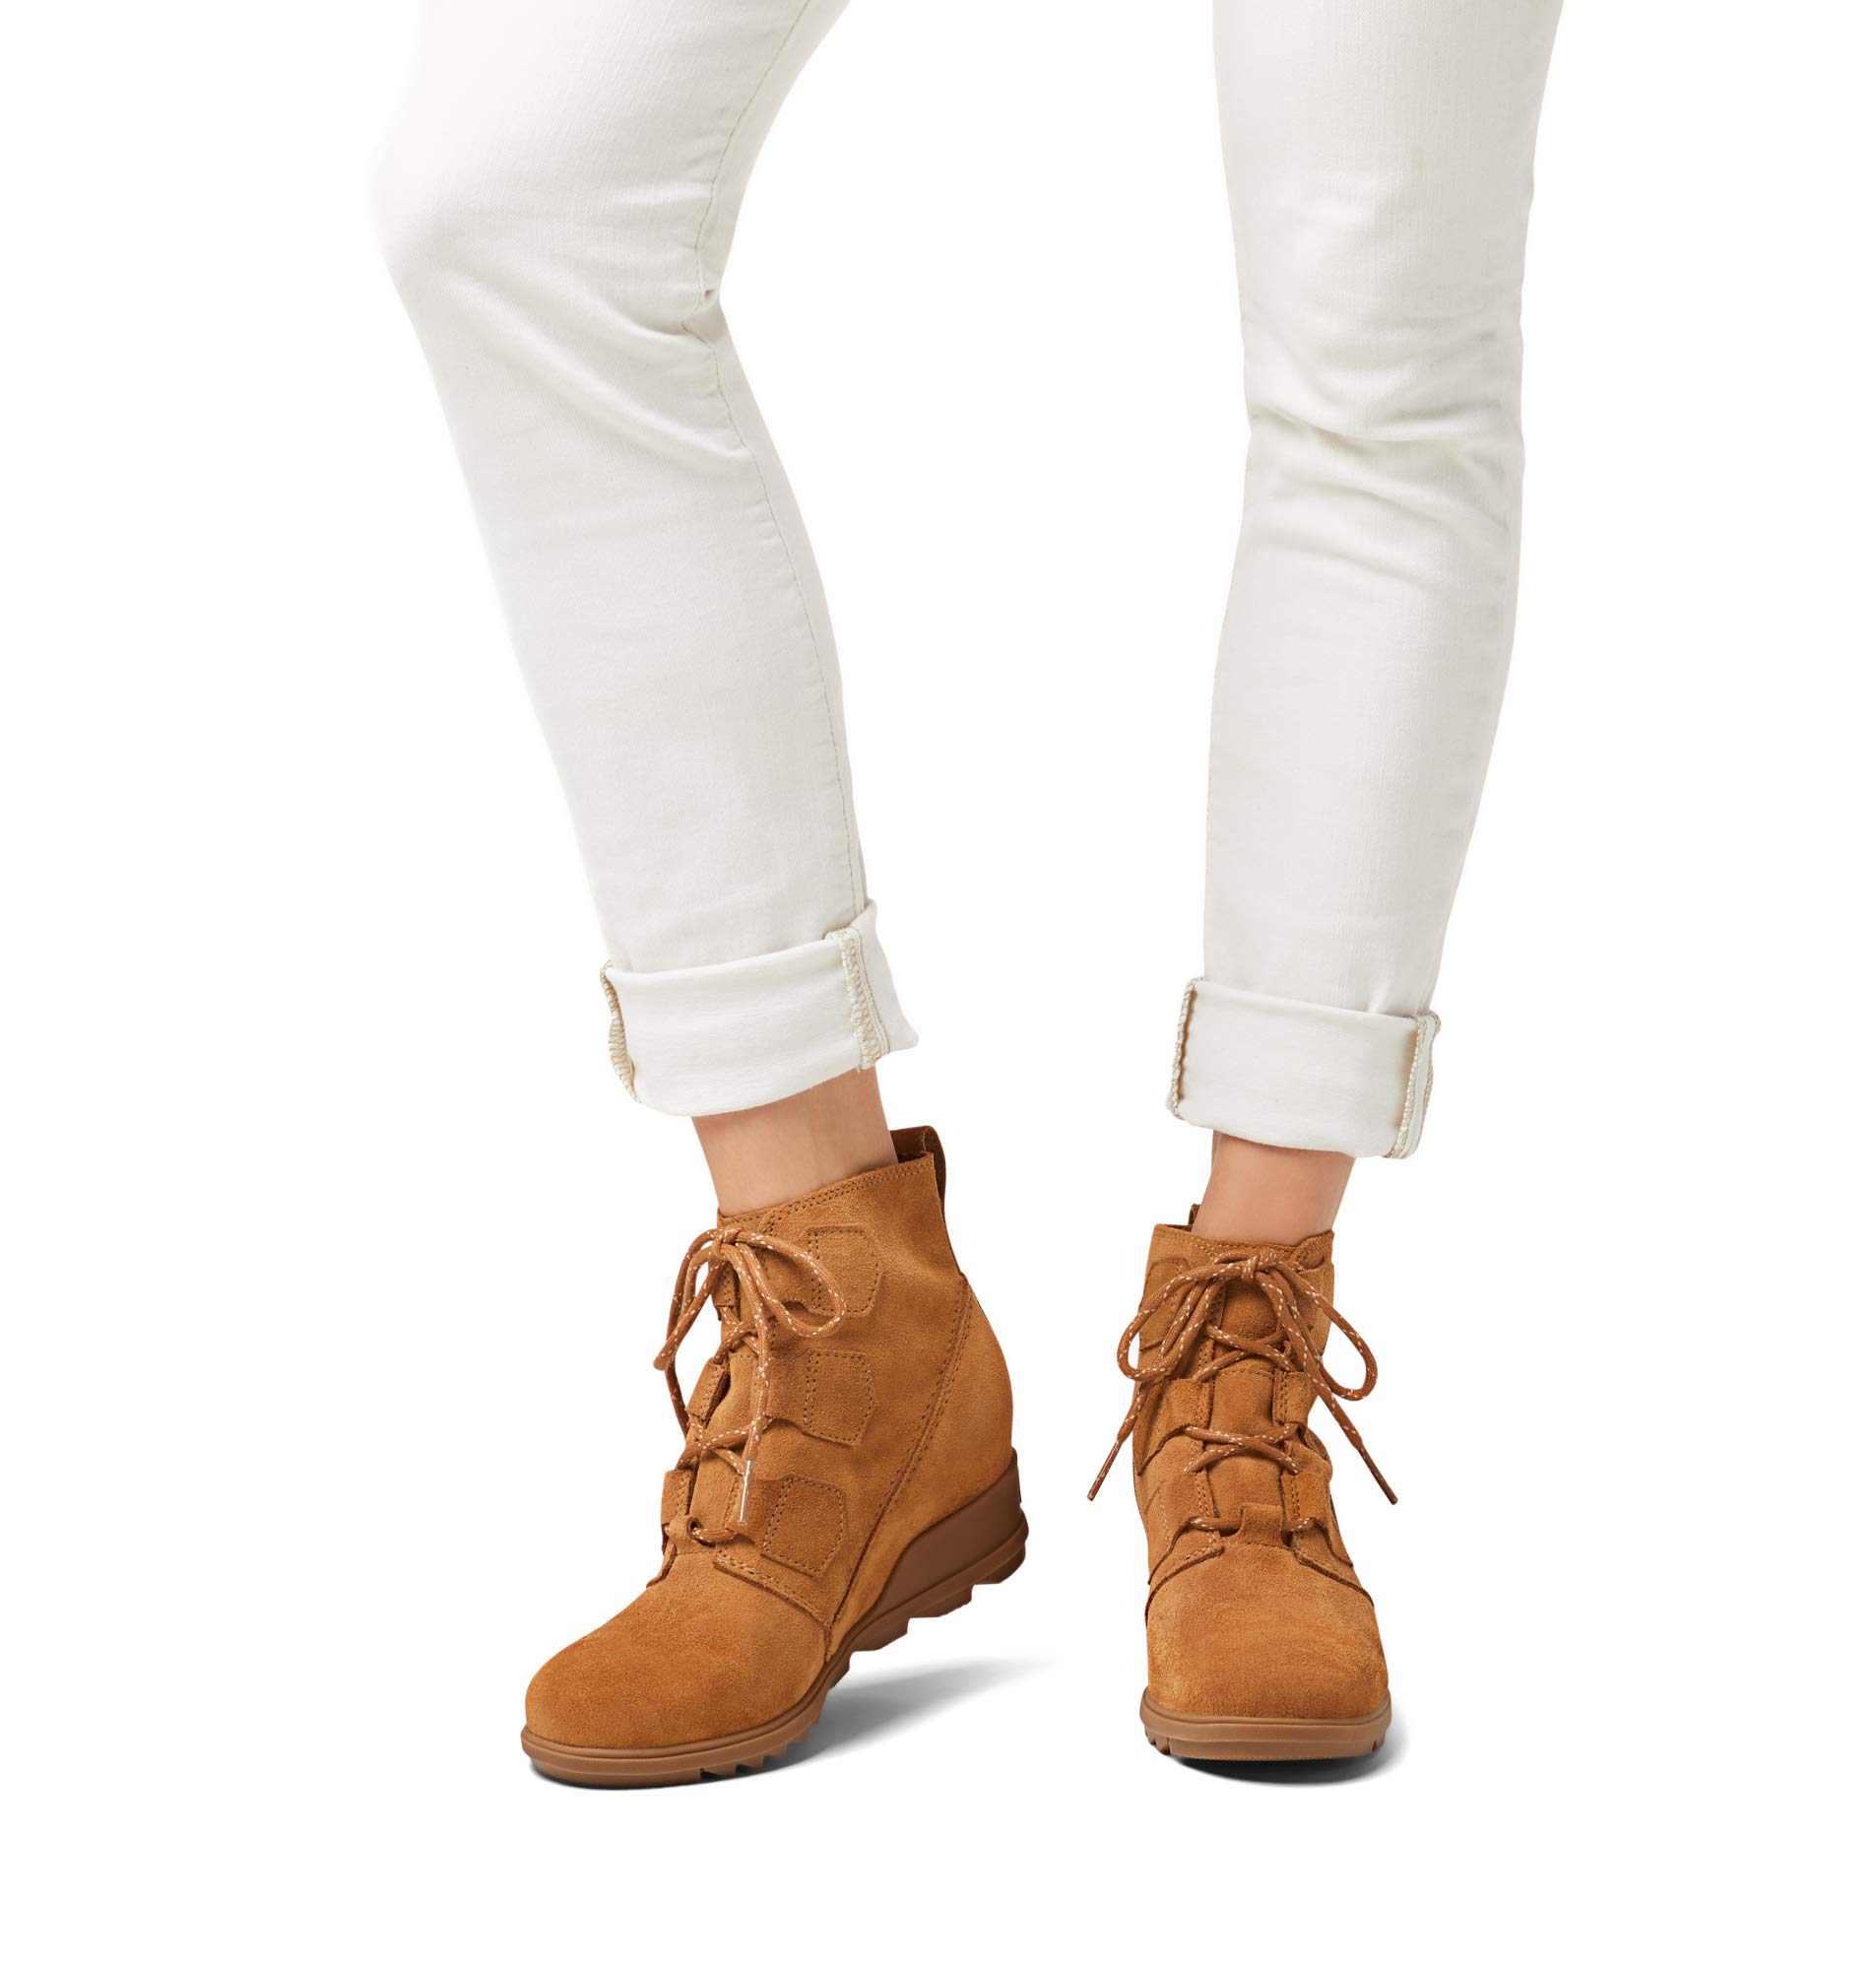 Sorel 1870261 Women's Cate Stacked Heel Waterproof Ankle Boot eBay